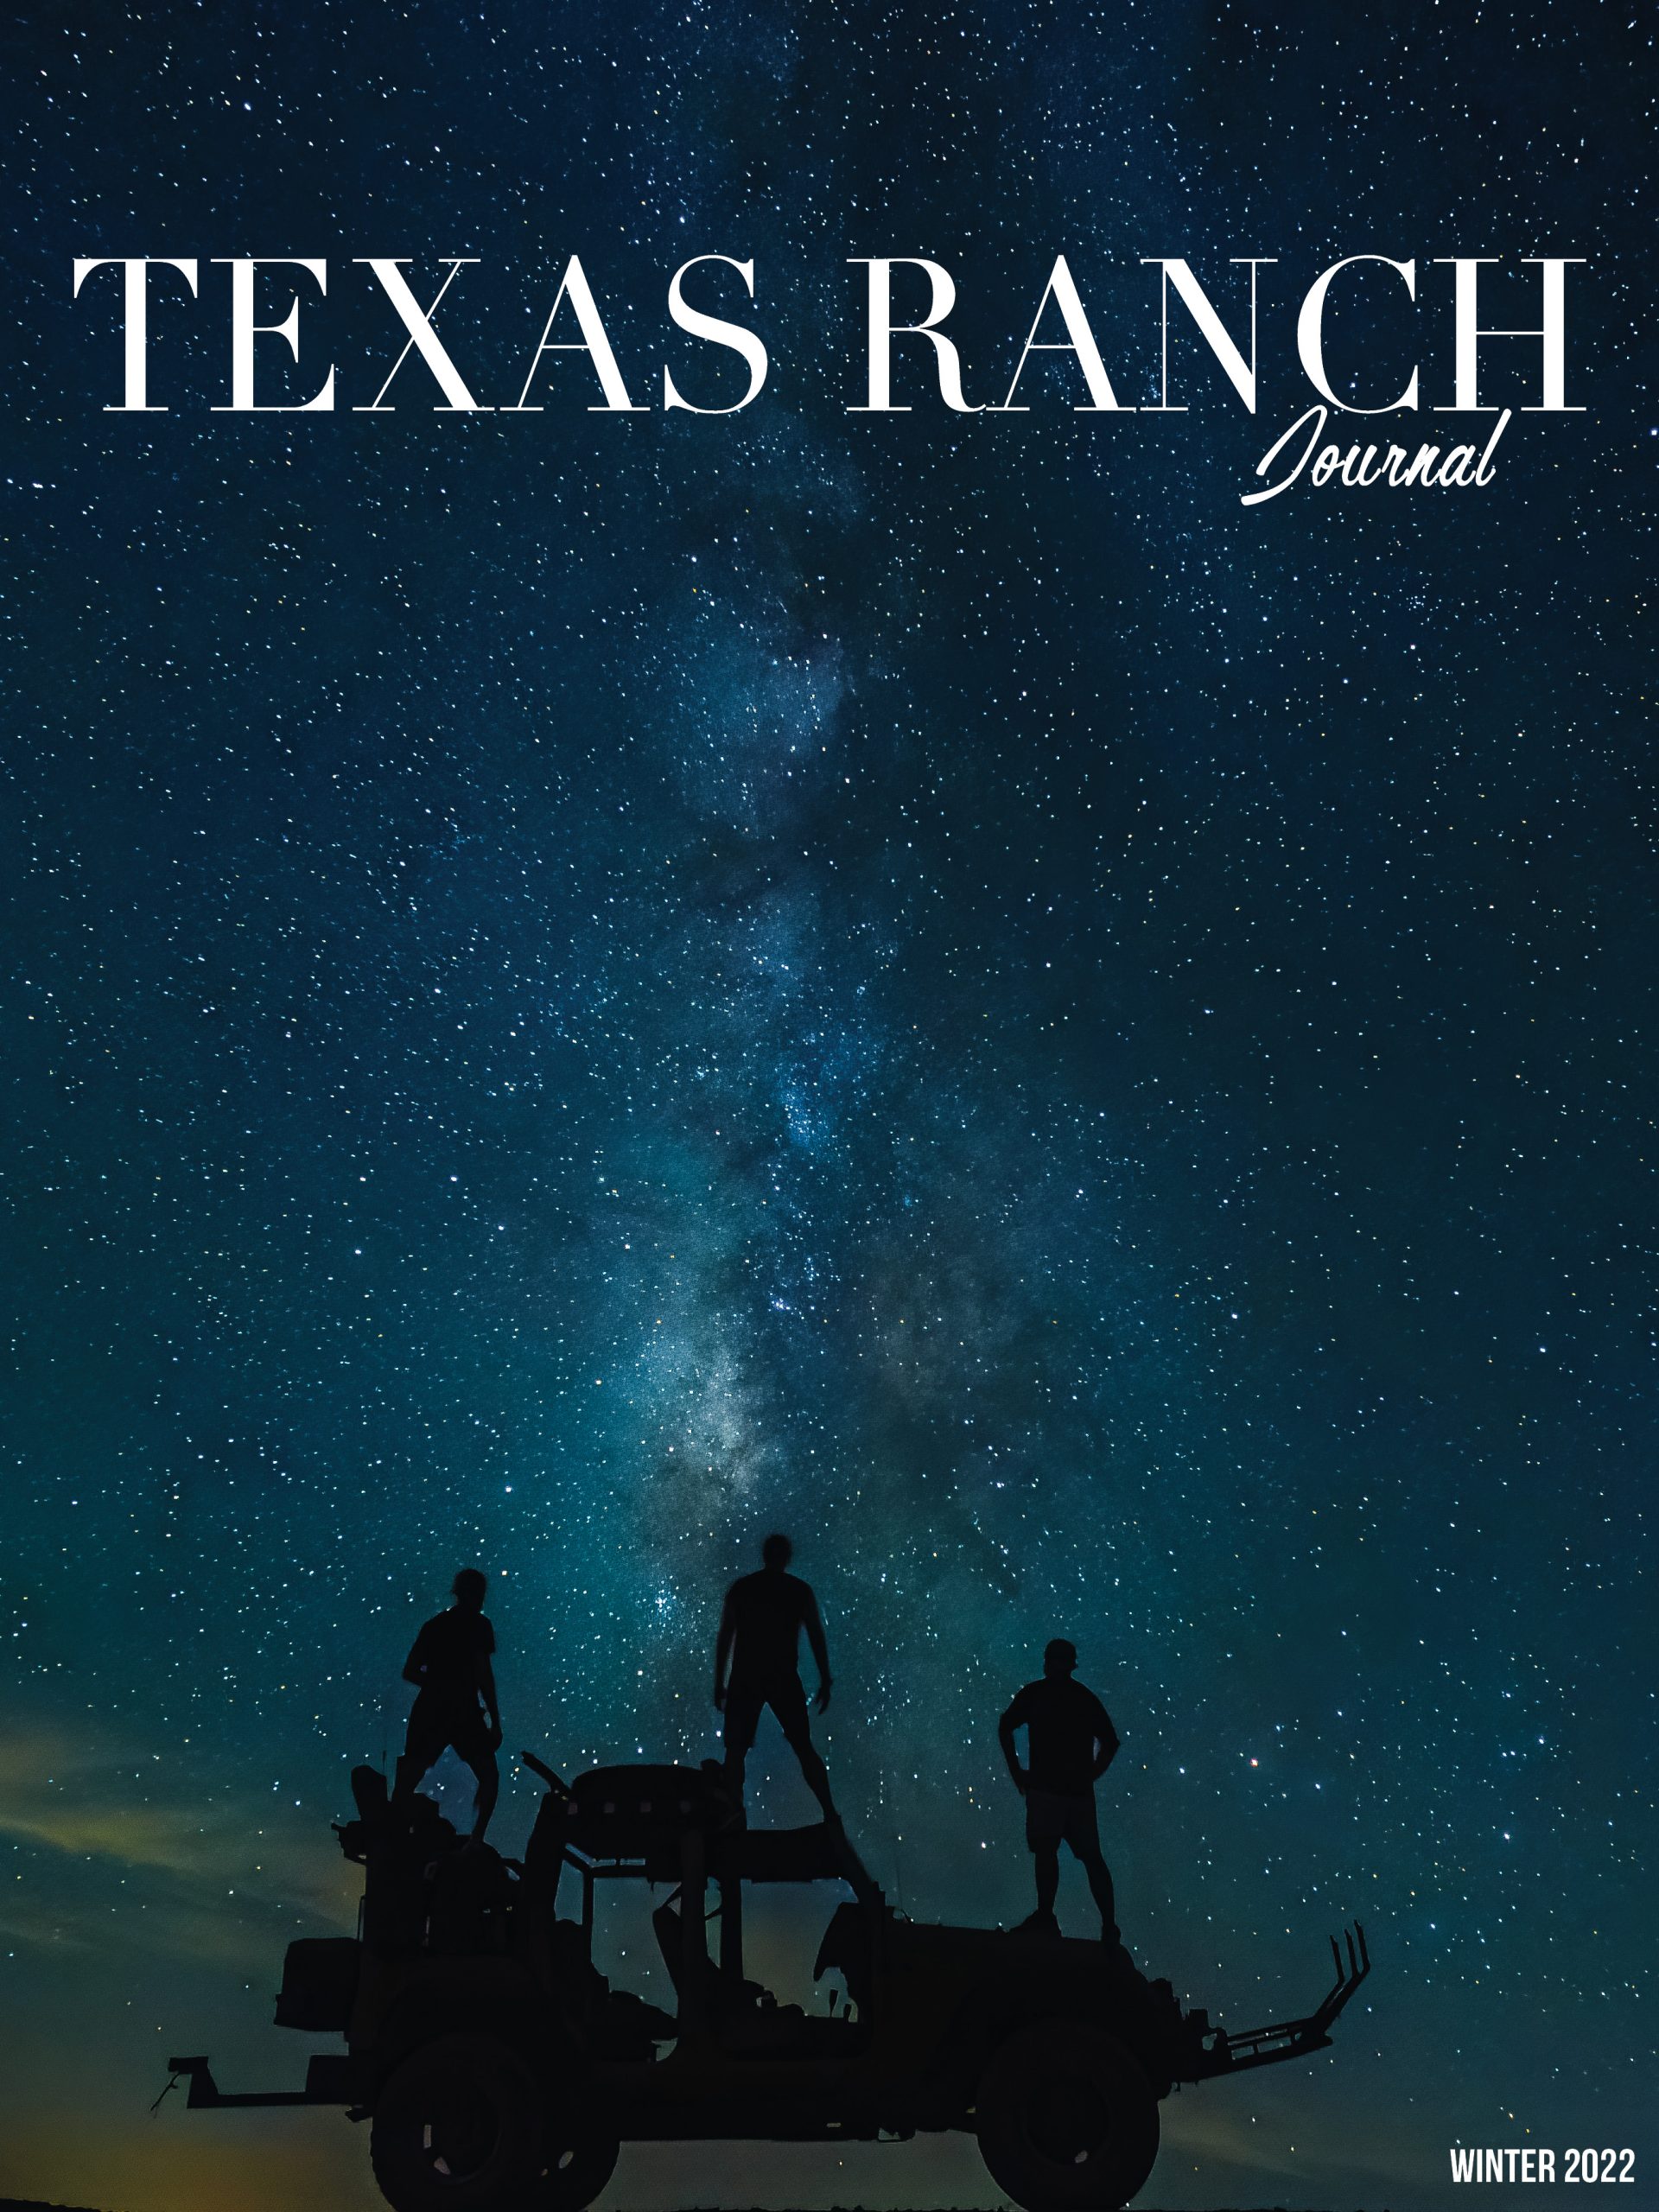 Texas Ranch Journal Summer 2021 Cover